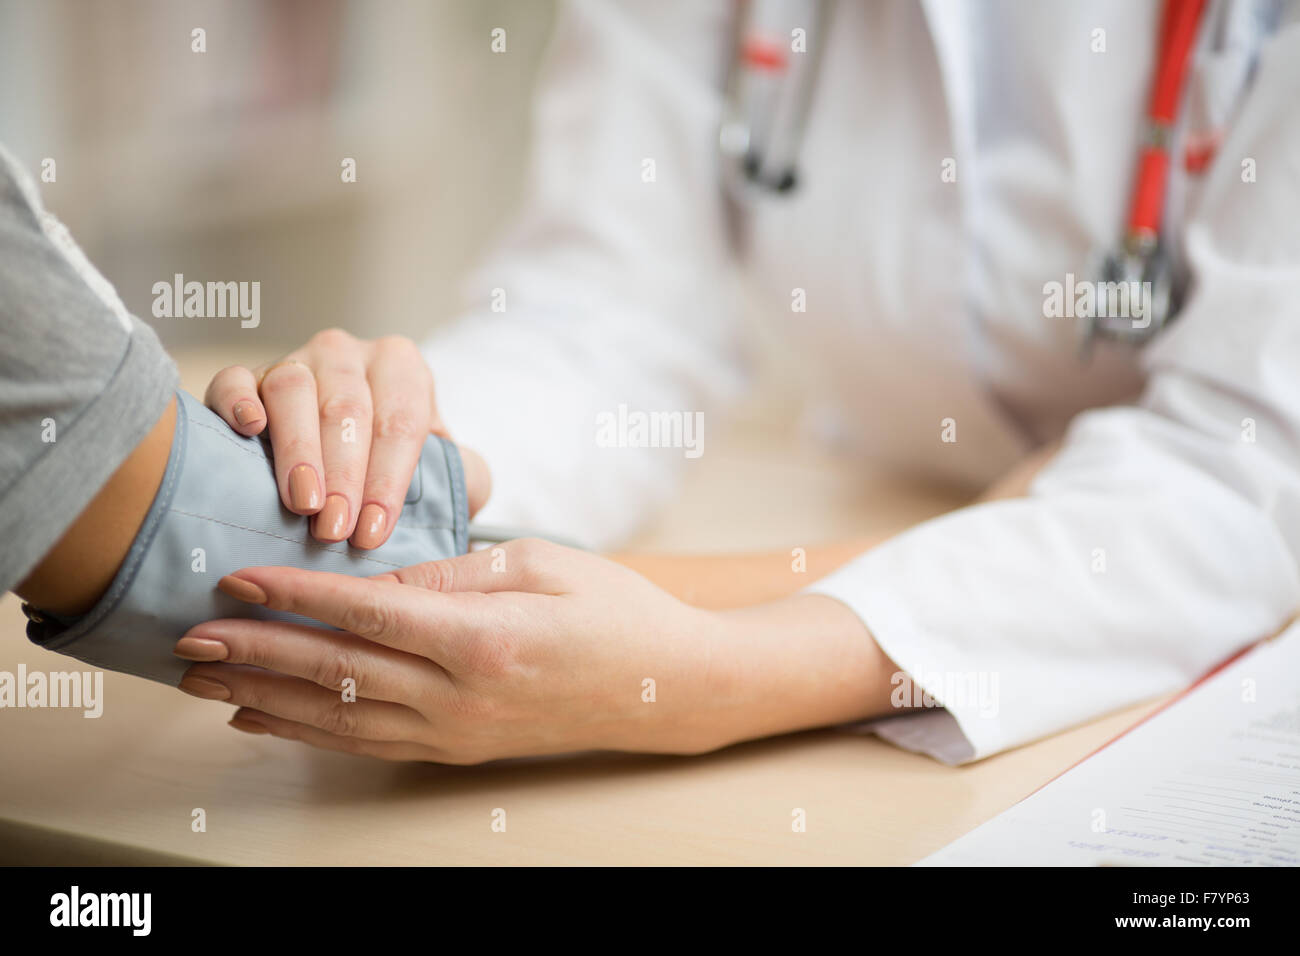 Doctor preparing blood pressure measurement Stock Photo